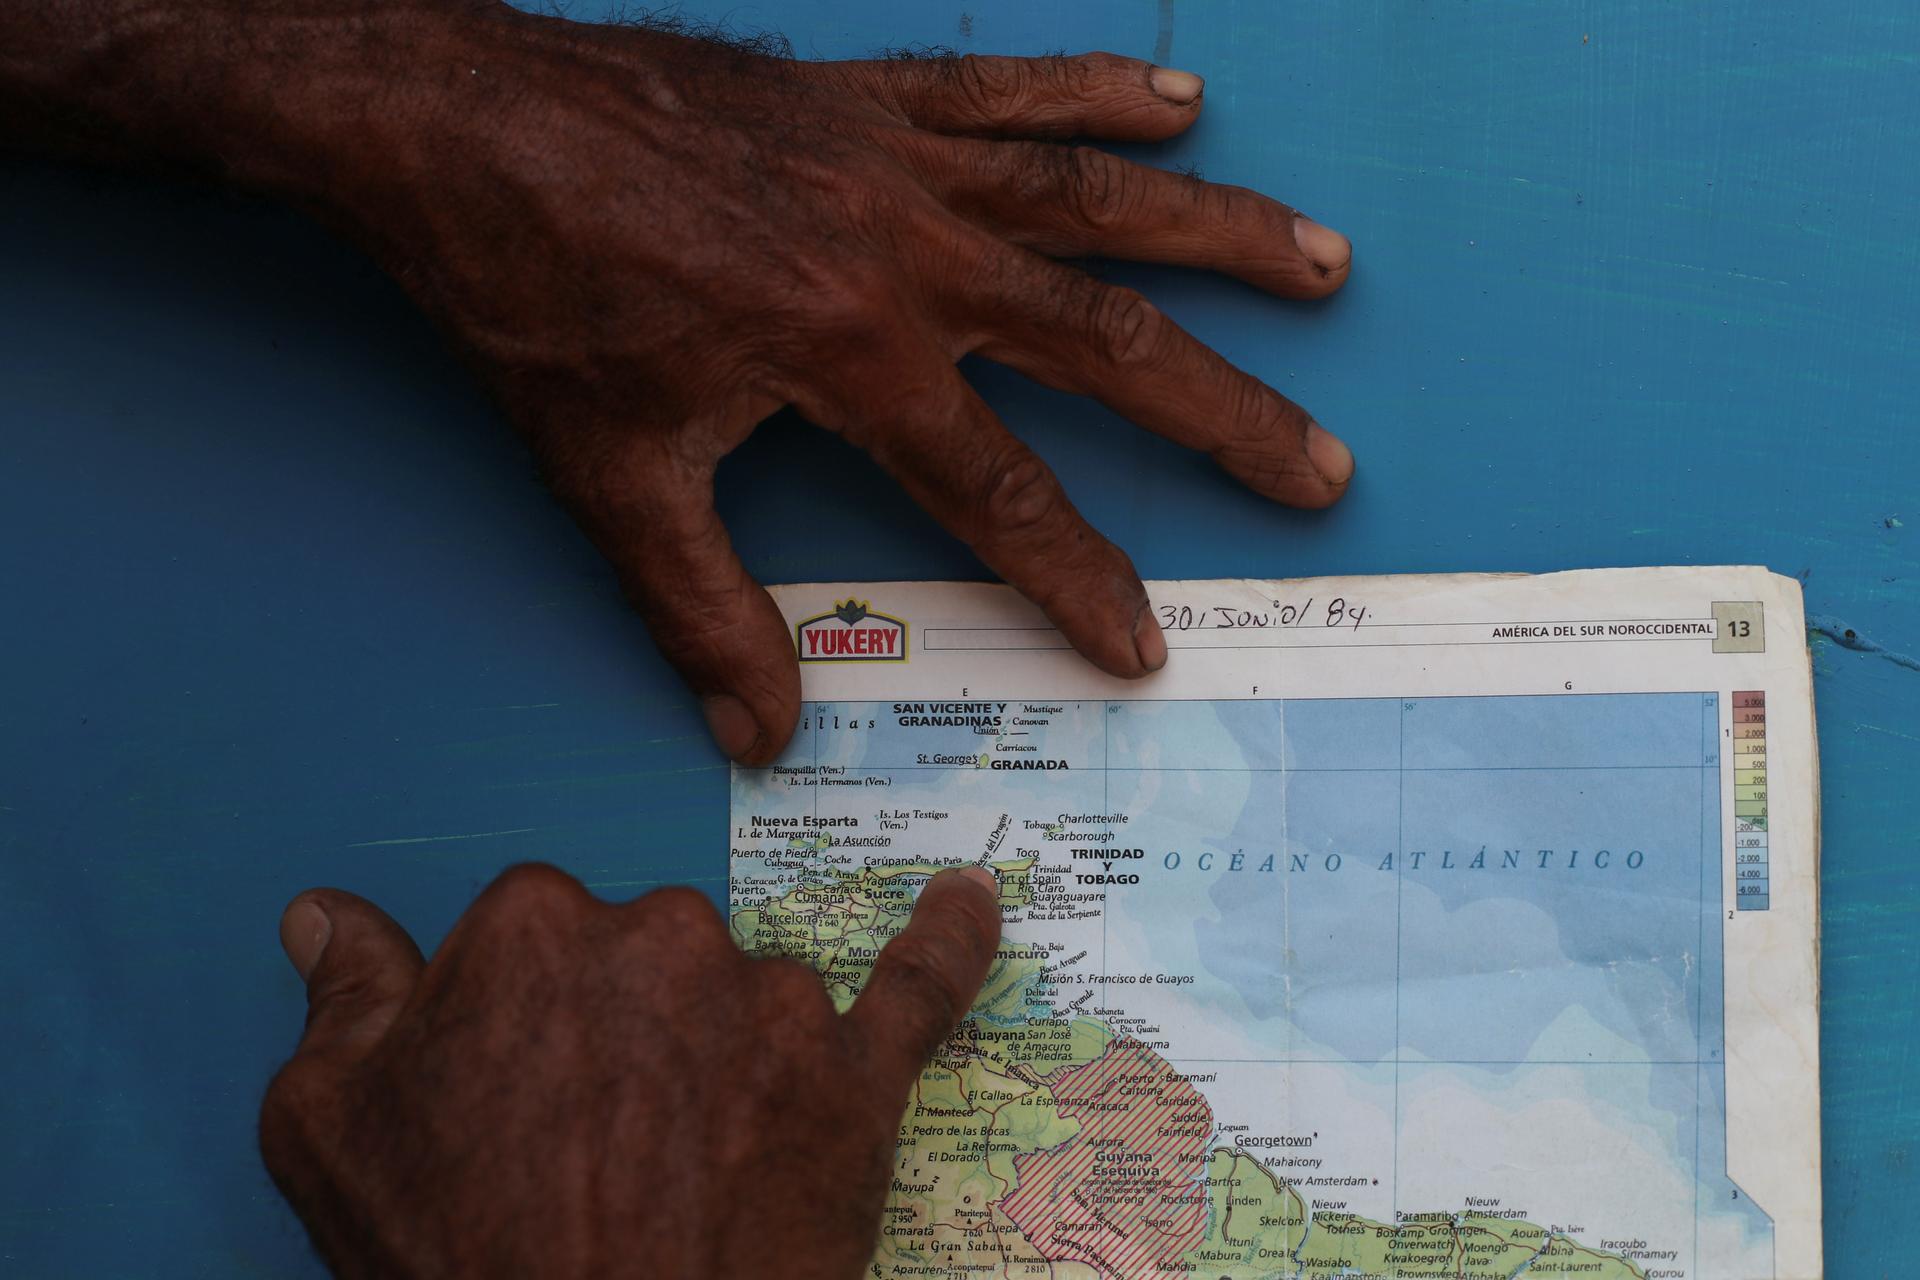 a man points out a dangerous sea passage on a map